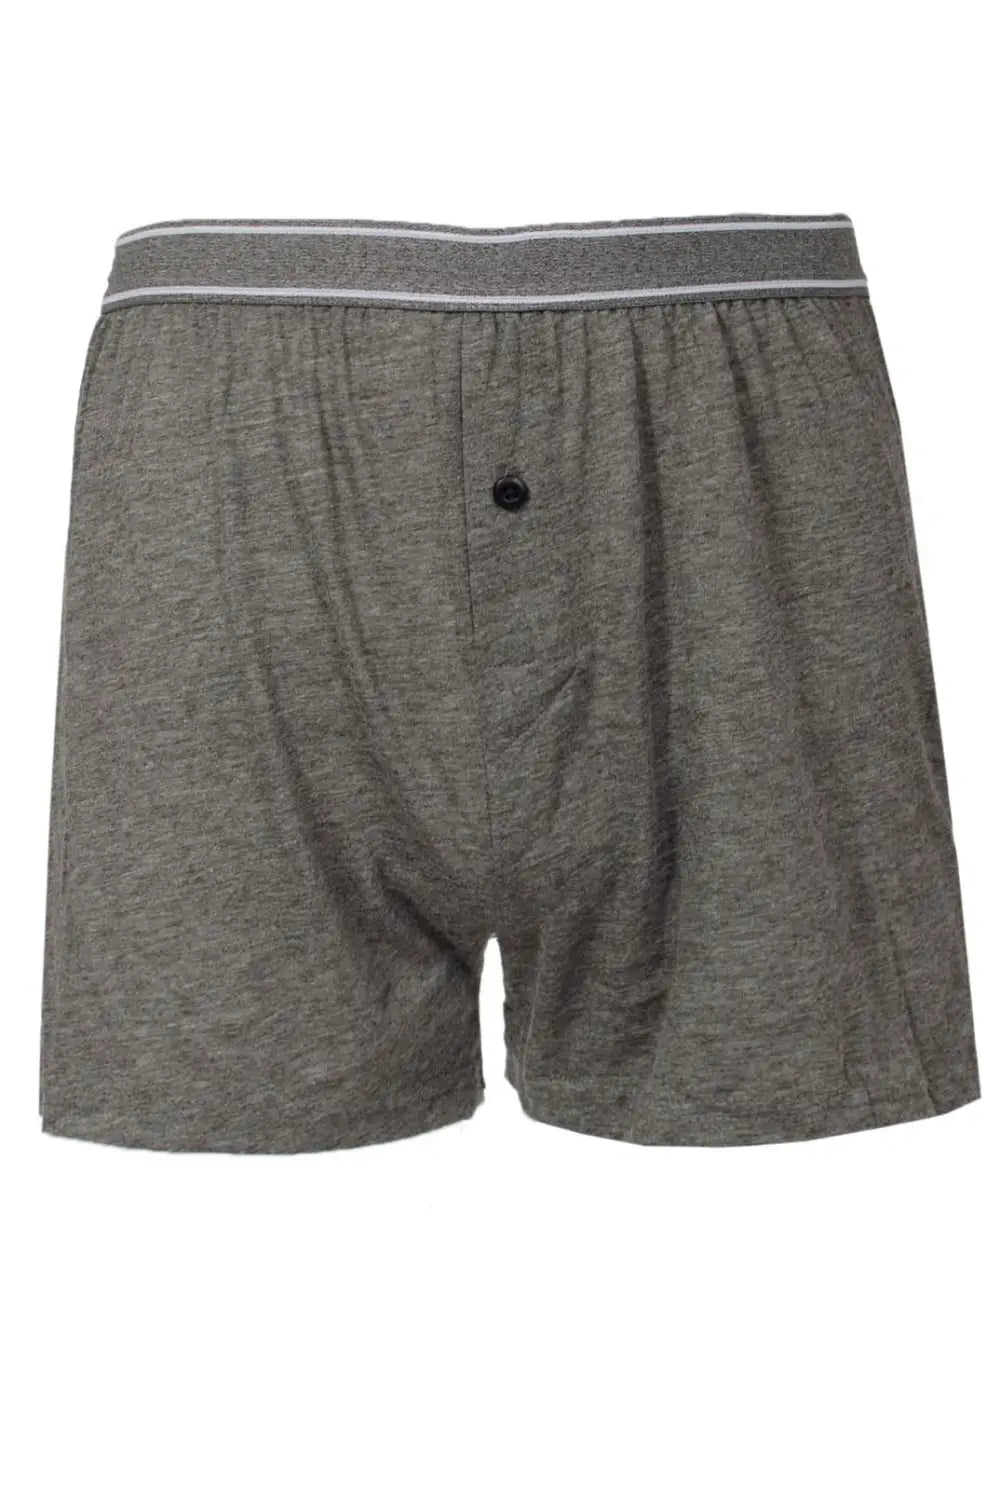 Cotton Jersey Boxers (3 pack) - MENS Underwear